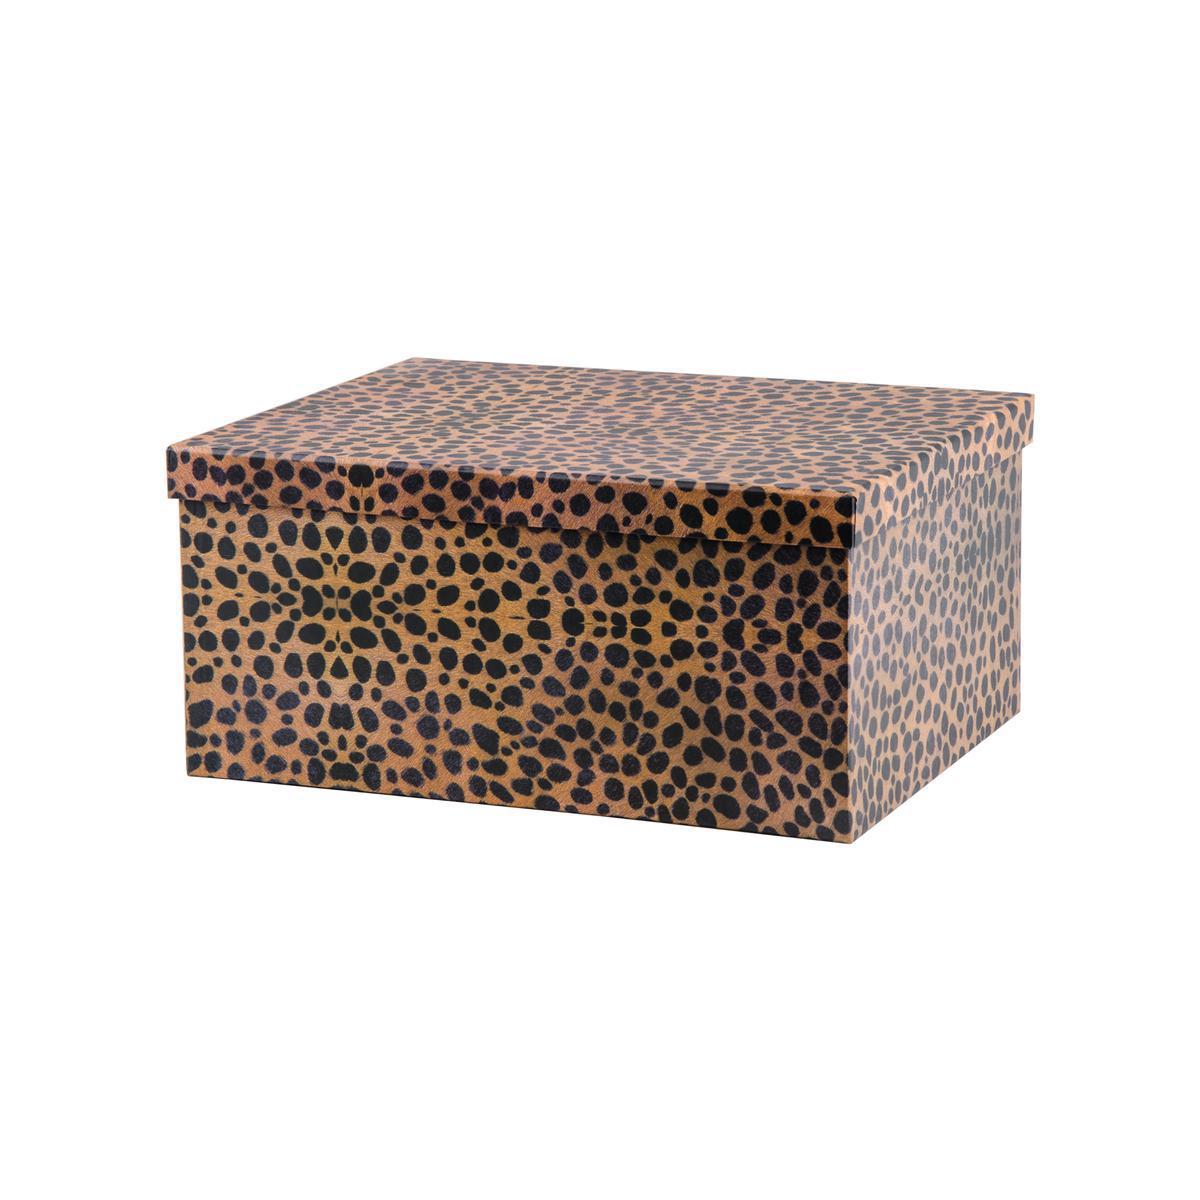 Boite tigré en carton - 30,5 x 23,5 x 13,5 cm - Noir et marron